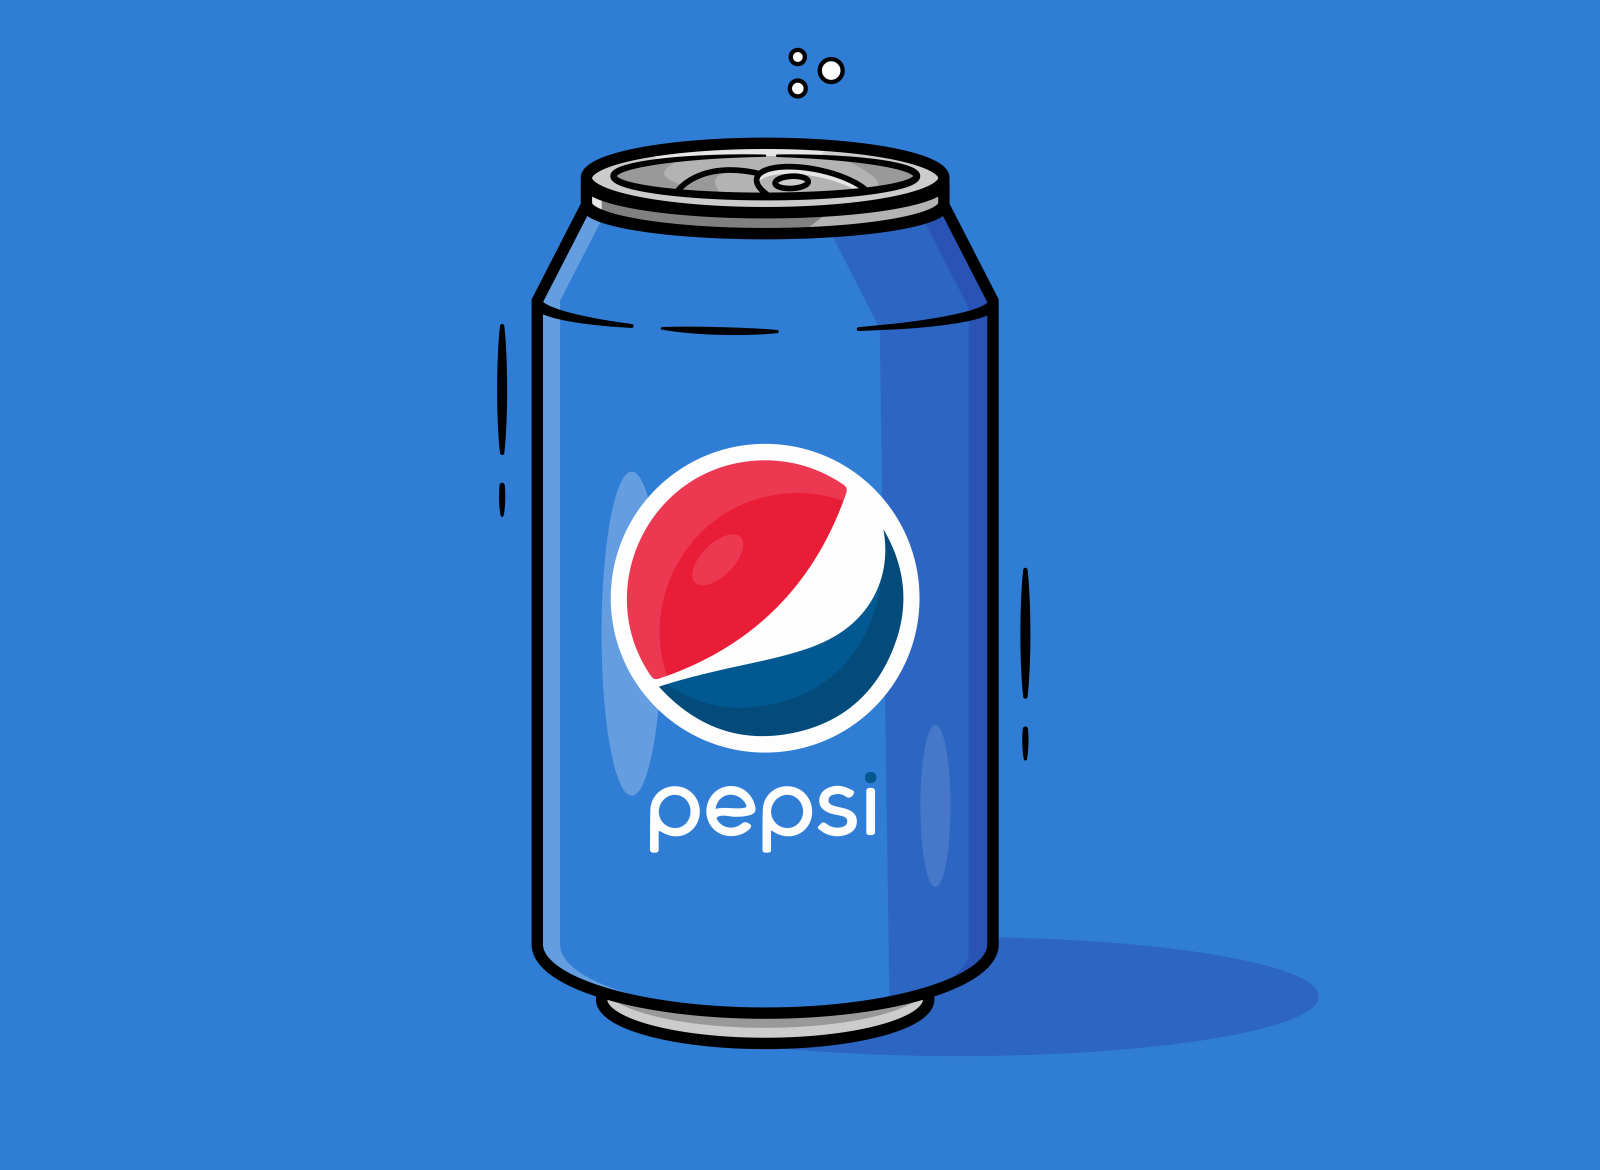 Pepsi versus Coke by Melissa Hartmann on Dribbble